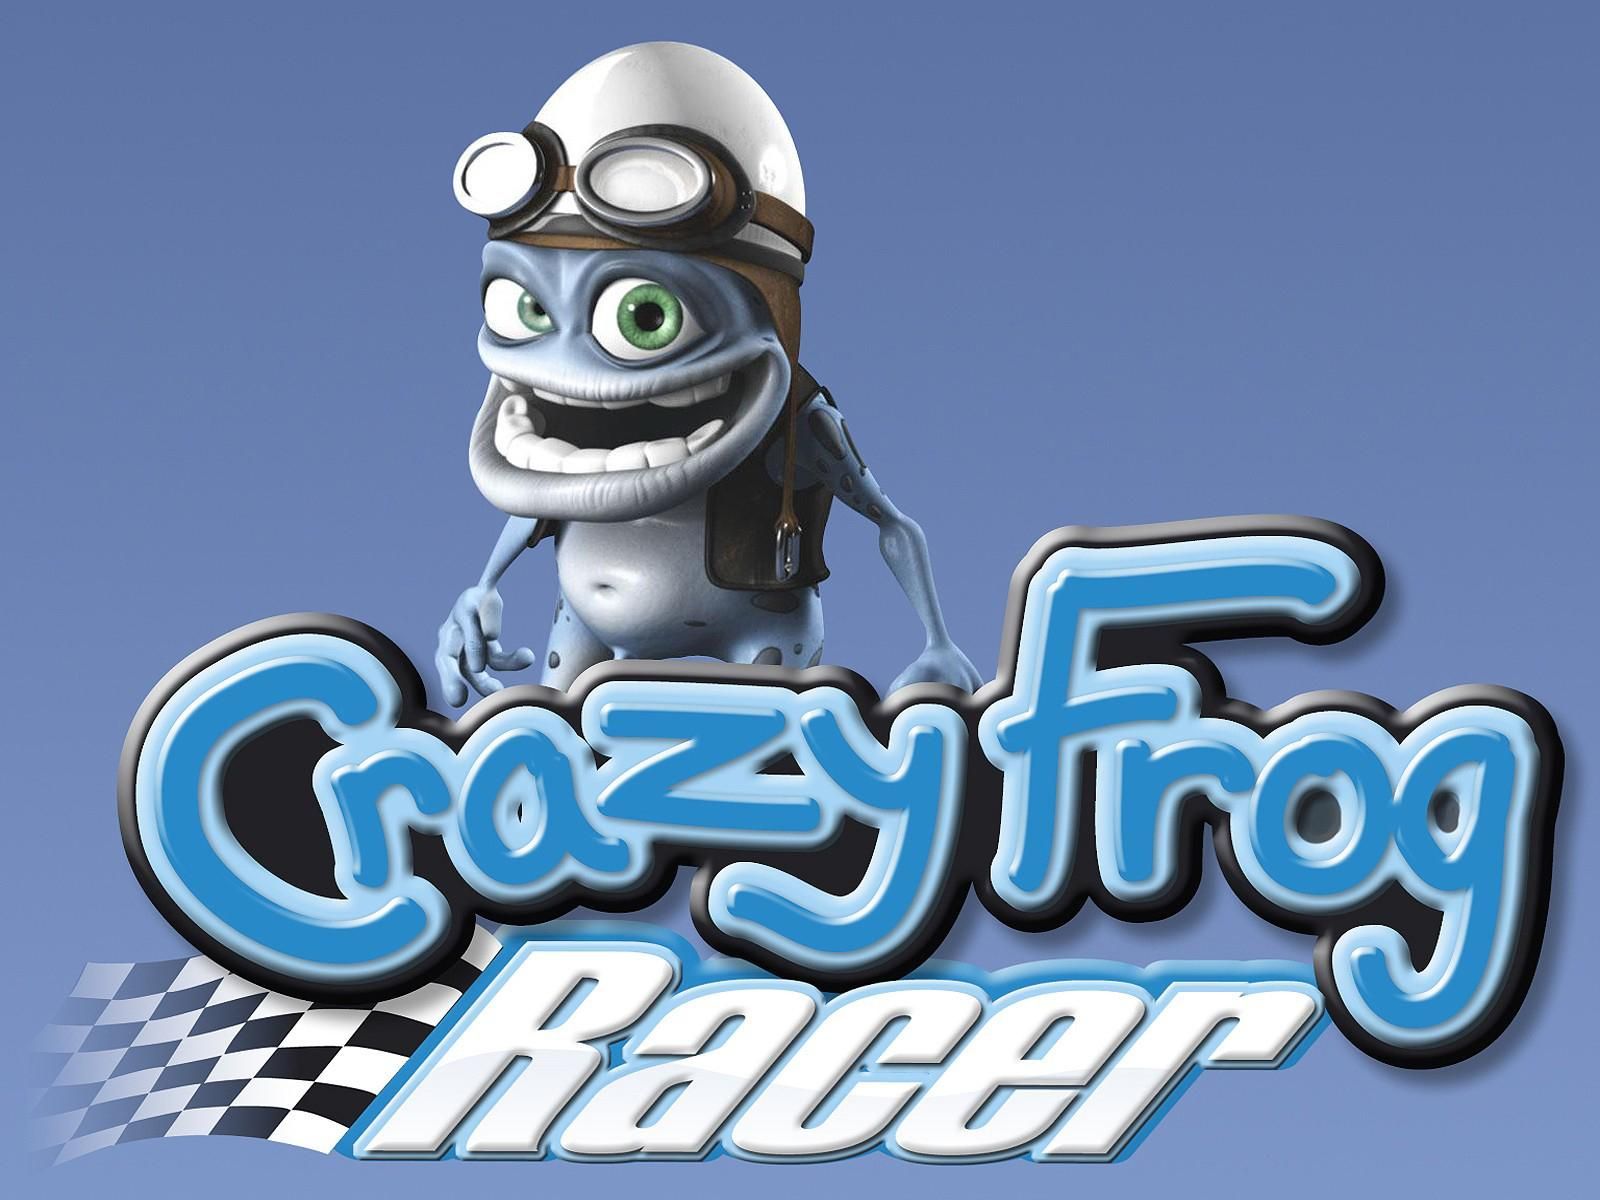 Wallpapers Crazy Frog Racer Games Image #174610 Download